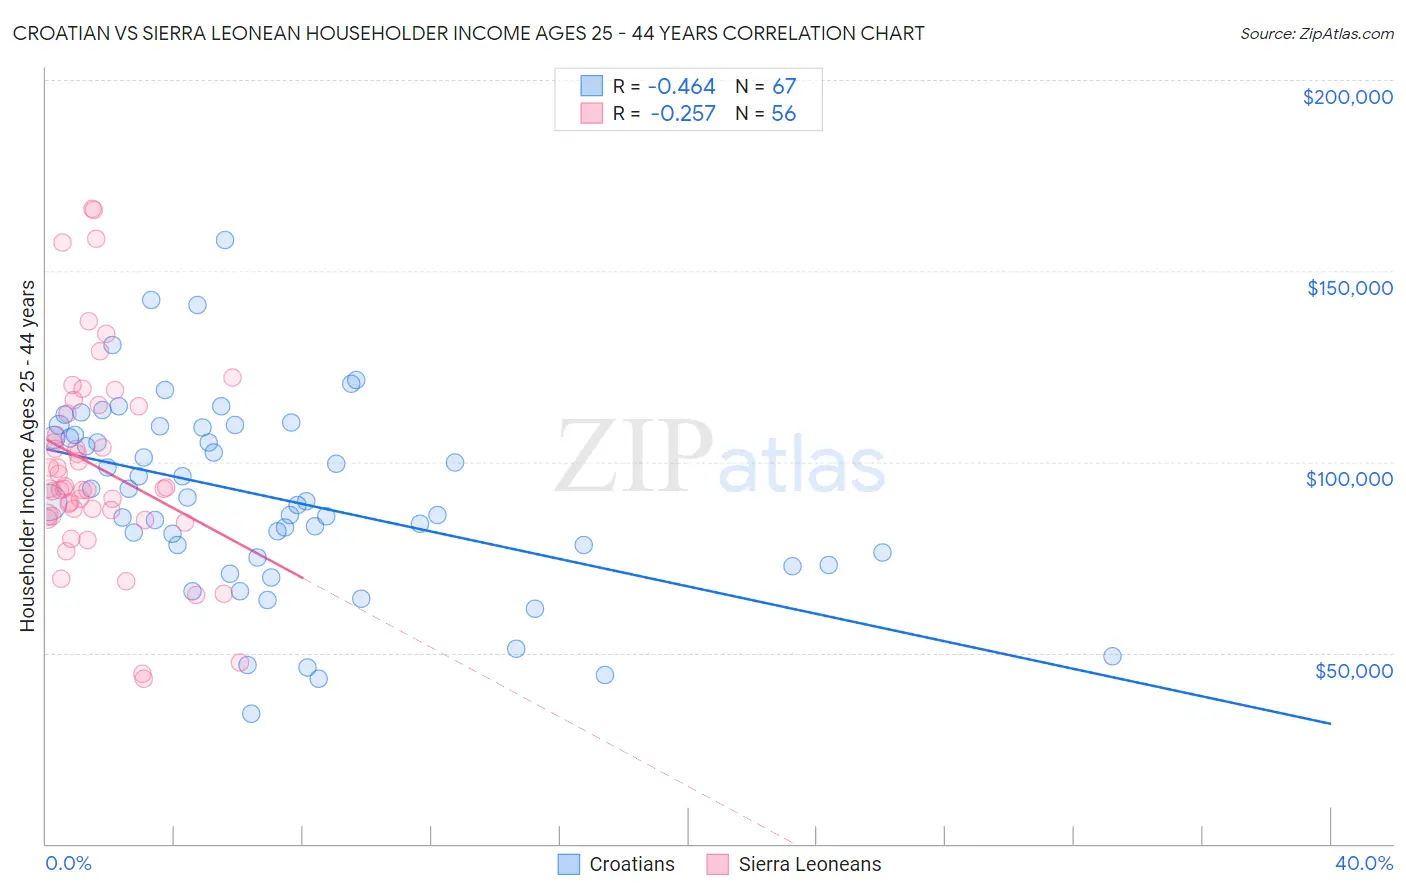 Croatian vs Sierra Leonean Householder Income Ages 25 - 44 years